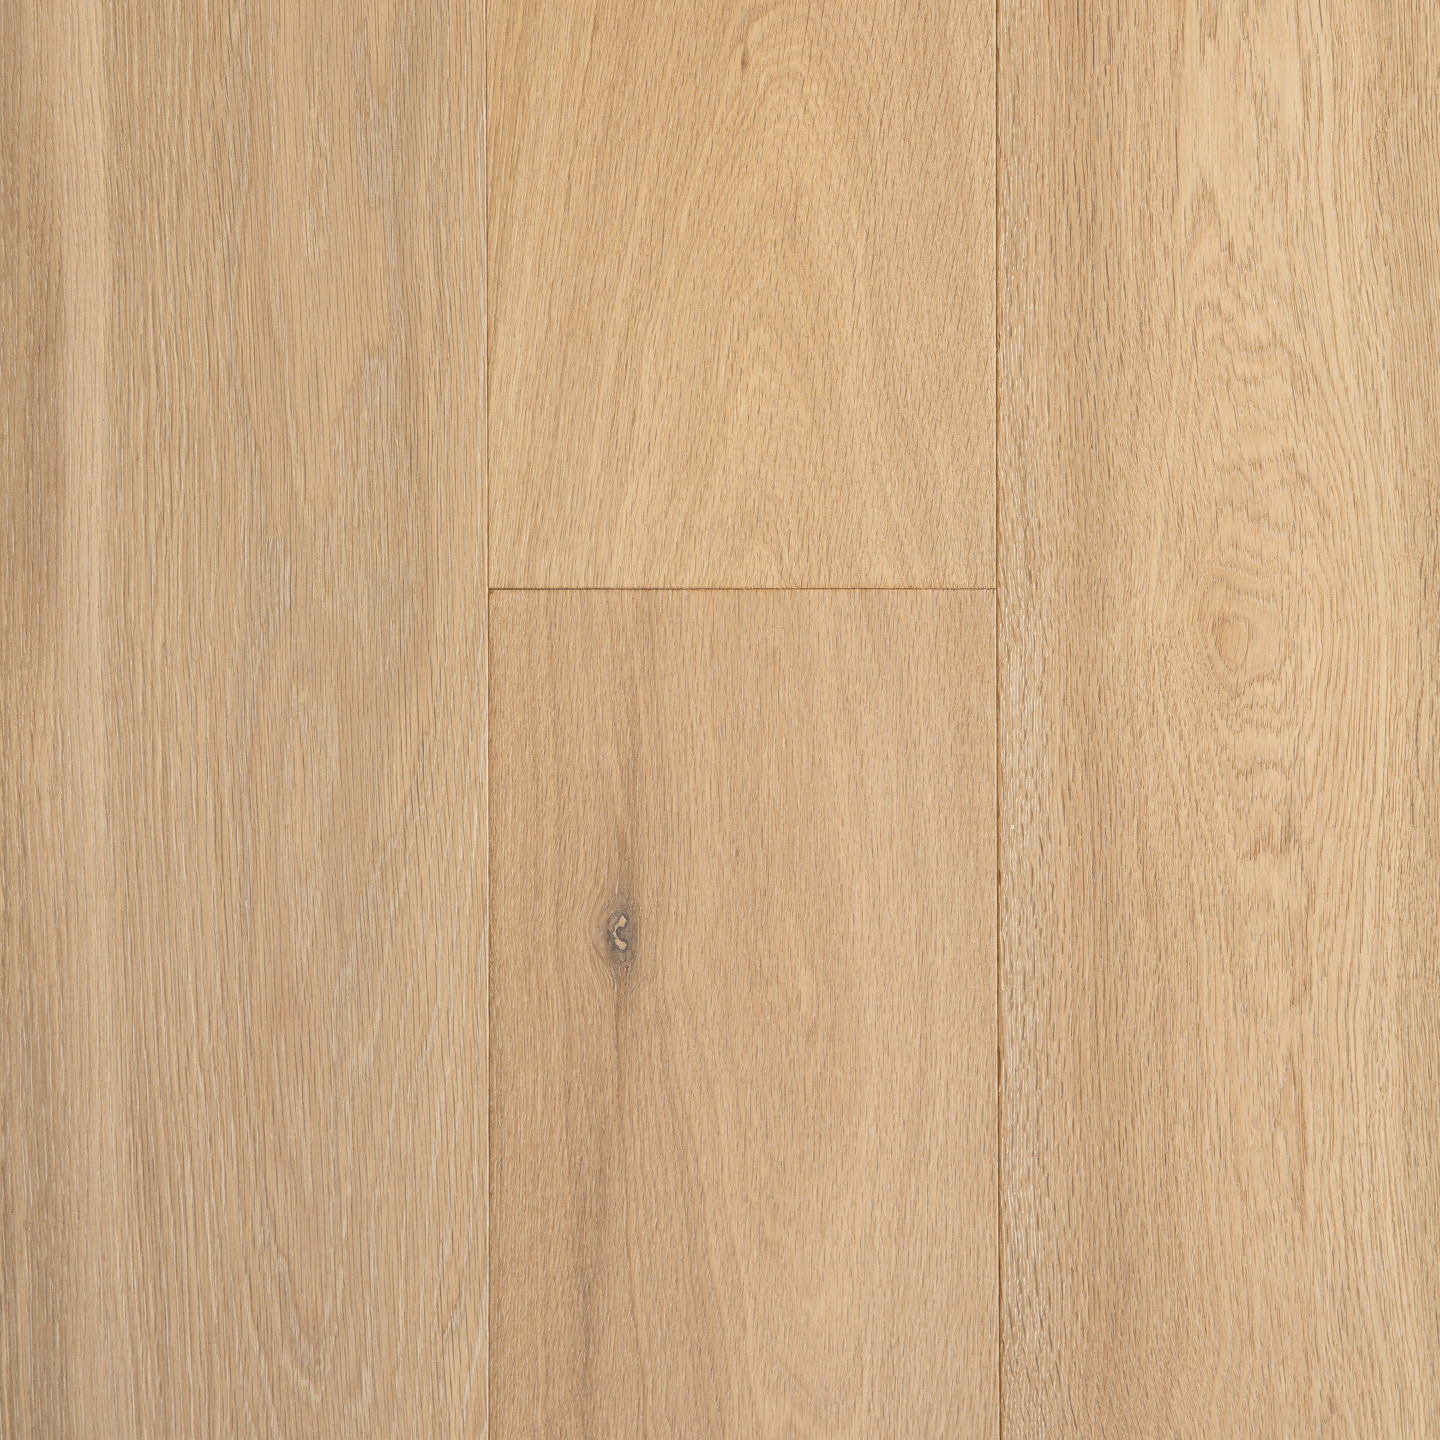 Wood Parquet Flooring - New York